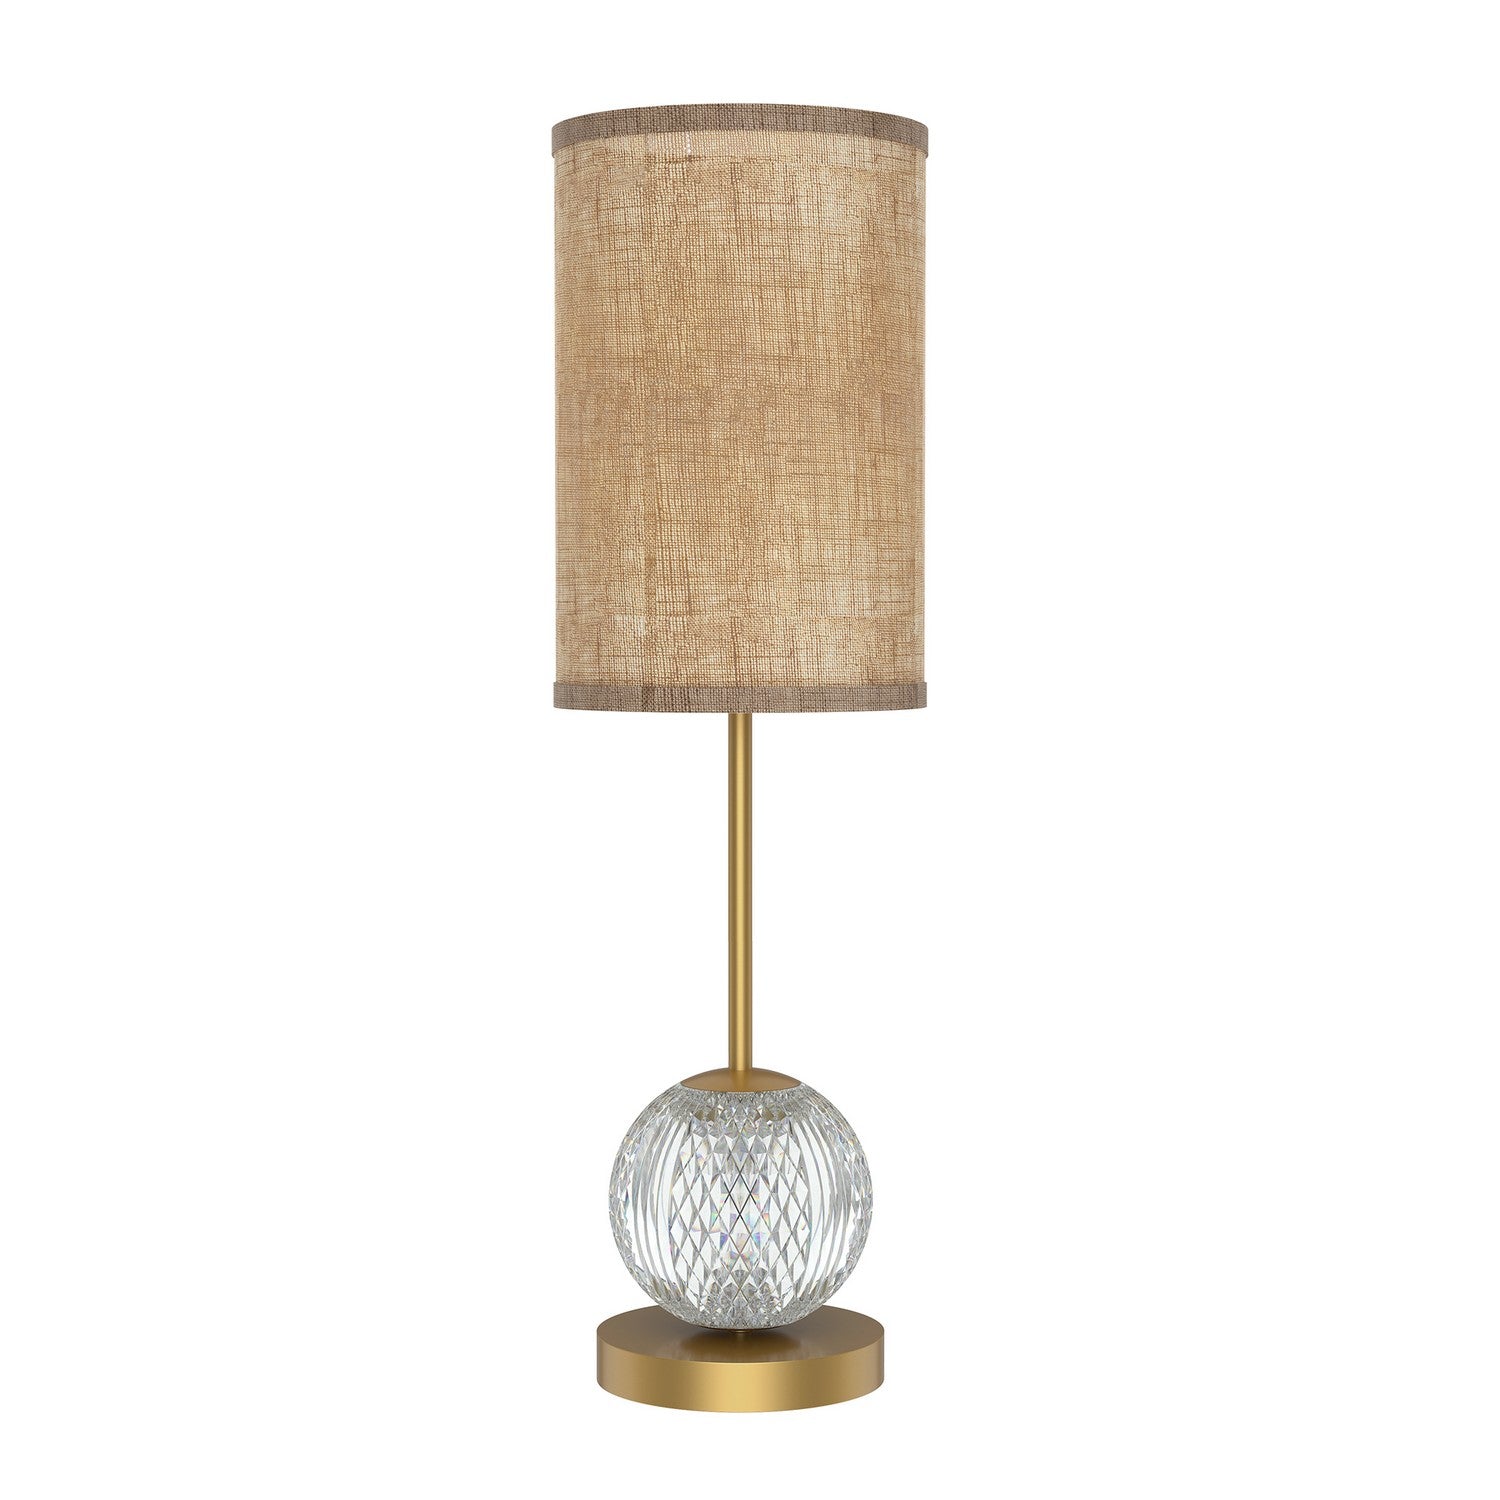 Alora Canada - LED Lamp - Marni - Natural Brass/White Linen- Union Lighting Luminaires Decor